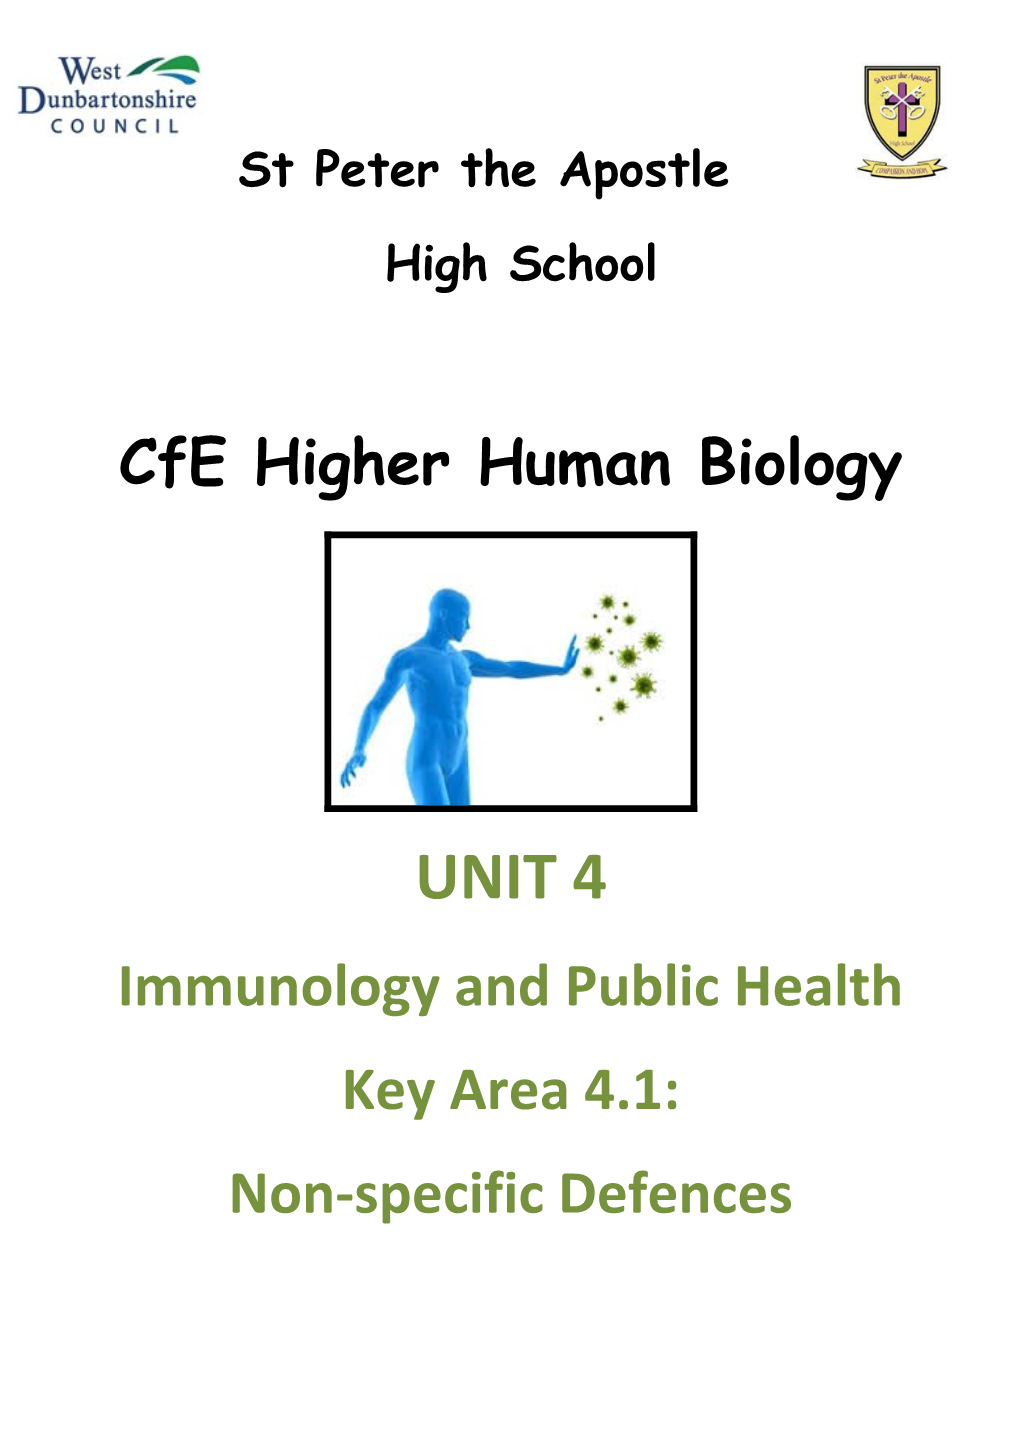 Cfe Higher Human Biology